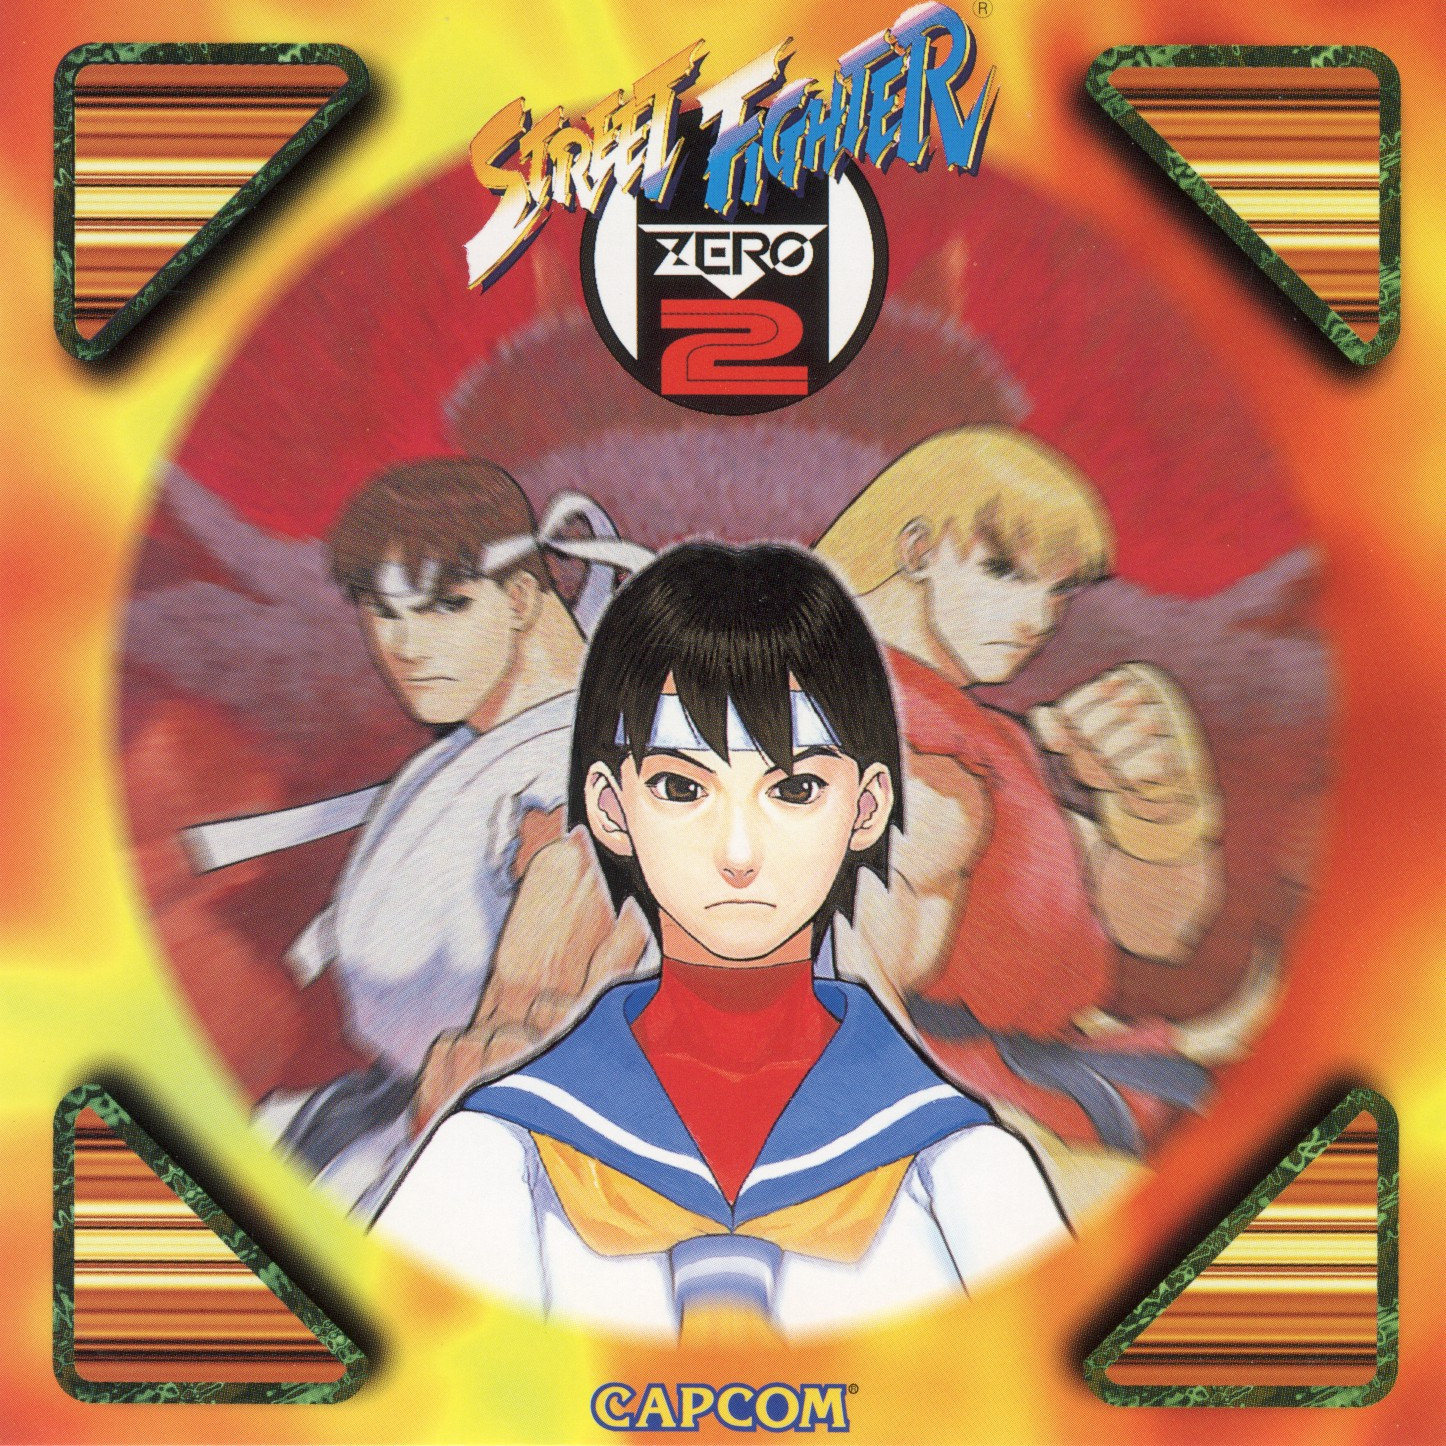 Street Fighter ZERO 2 Capcom Game Soundtrack专辑